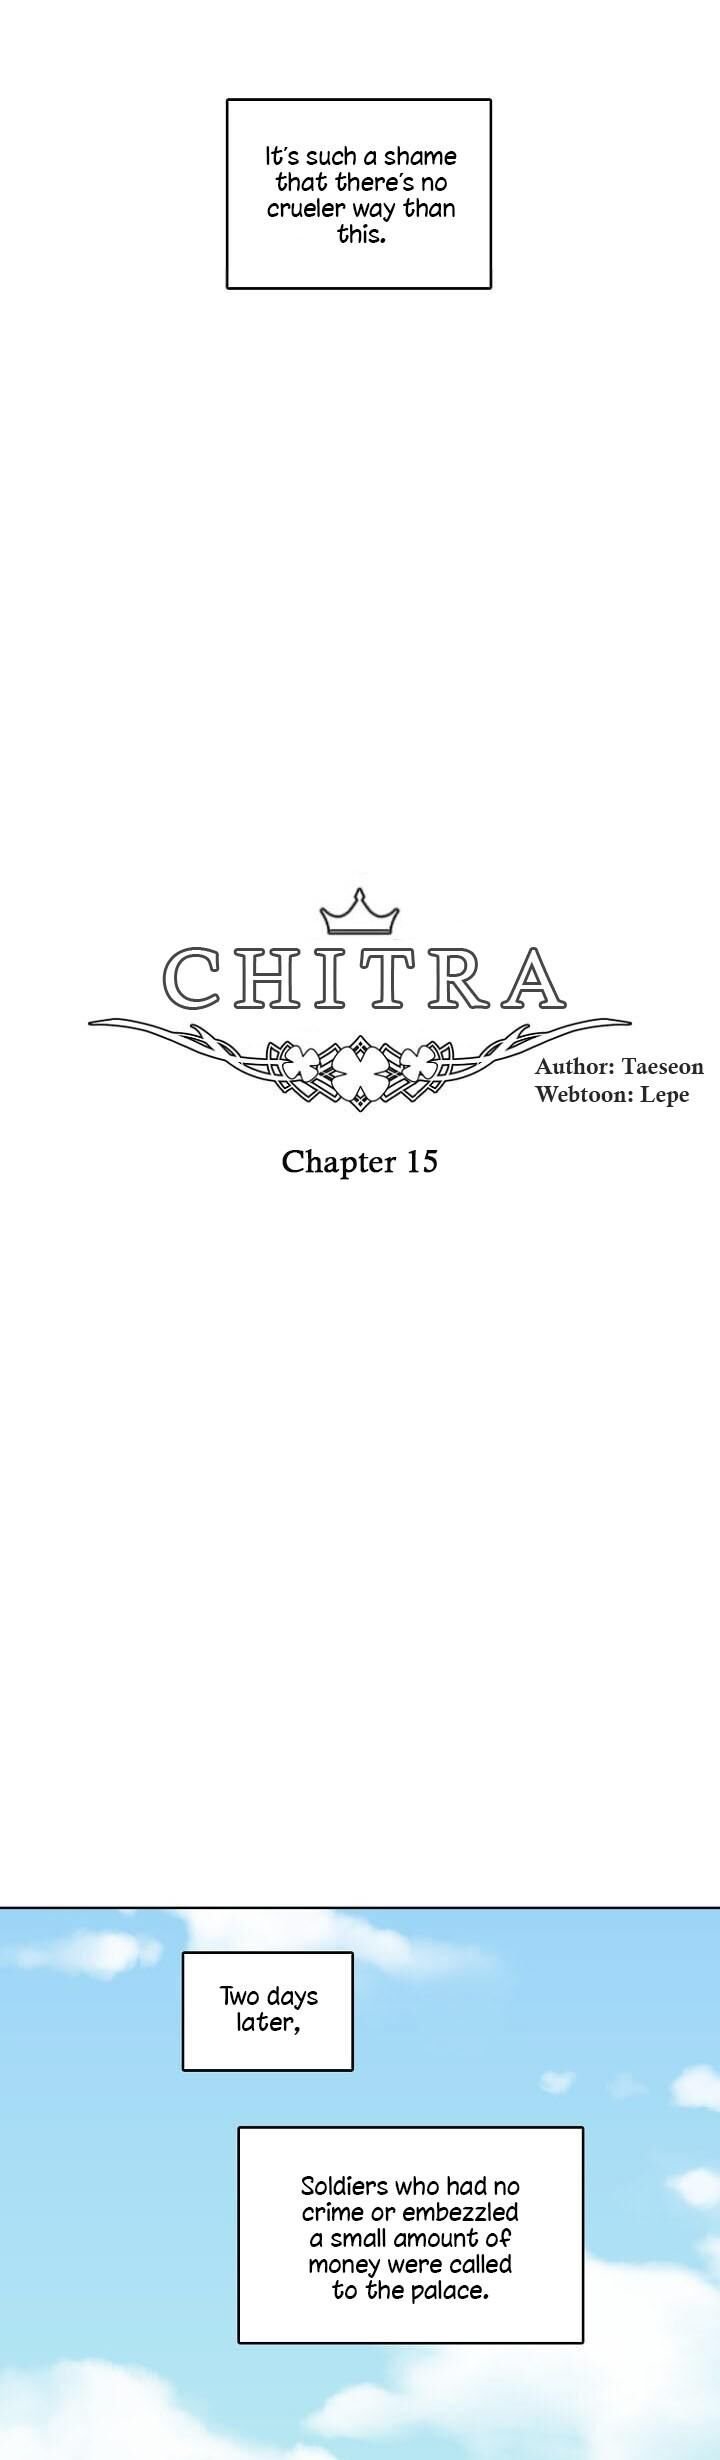 Chitra chapter 15